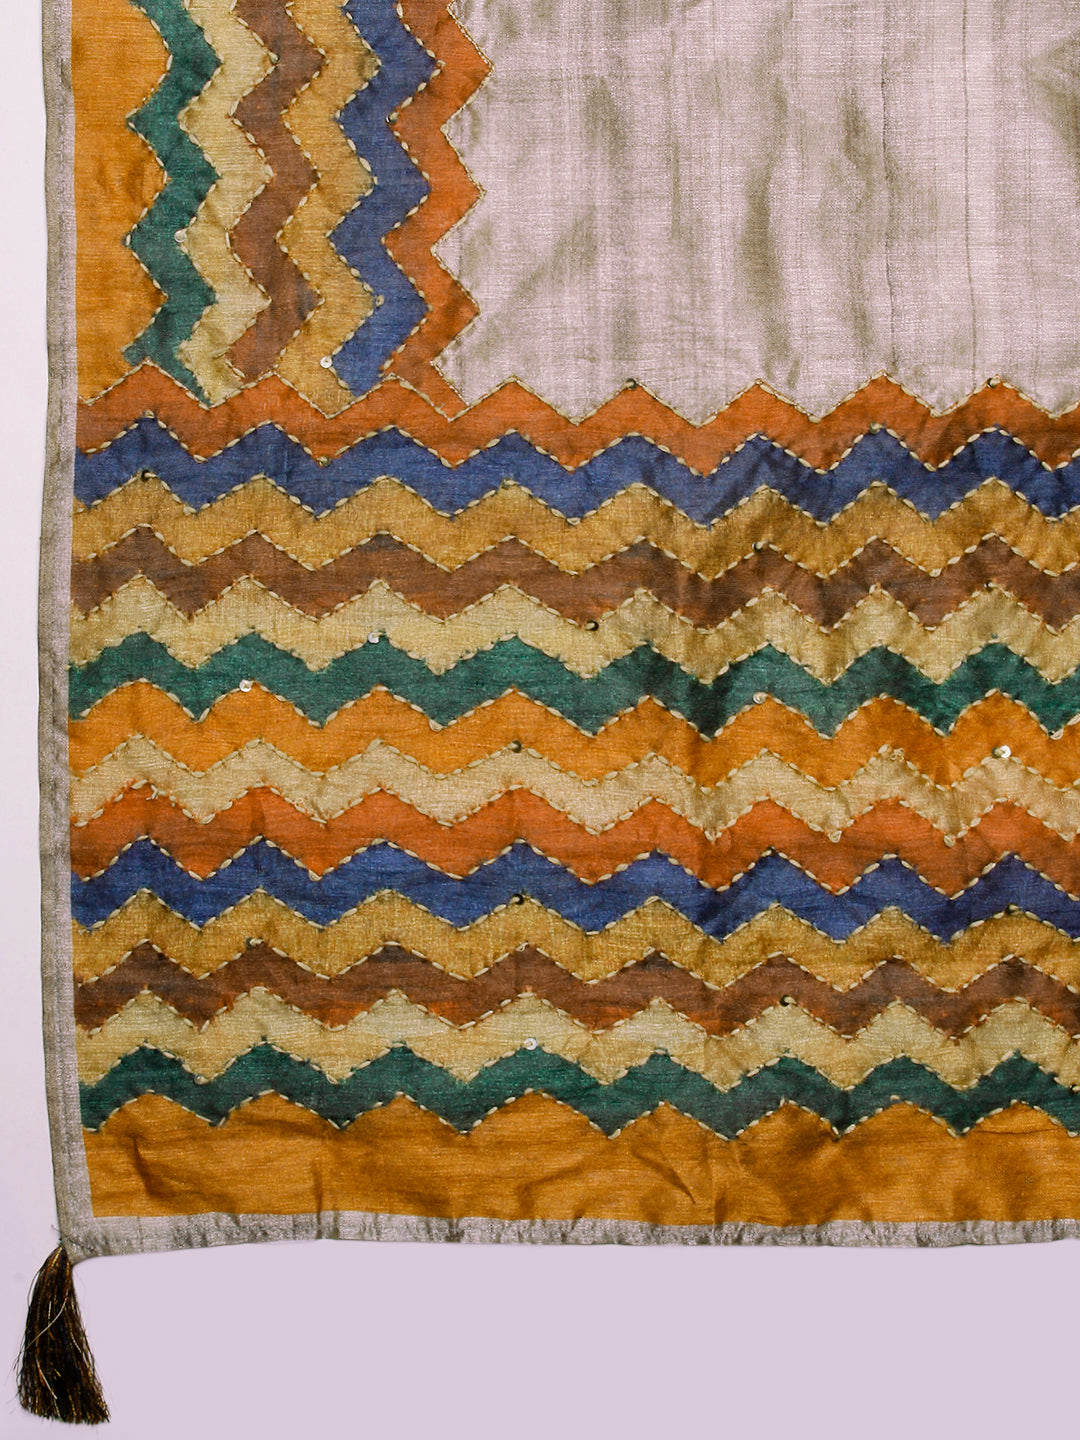 Textured Striped Resham & Sequins Embroidered Kurta With Matching Dupatta - Taupe